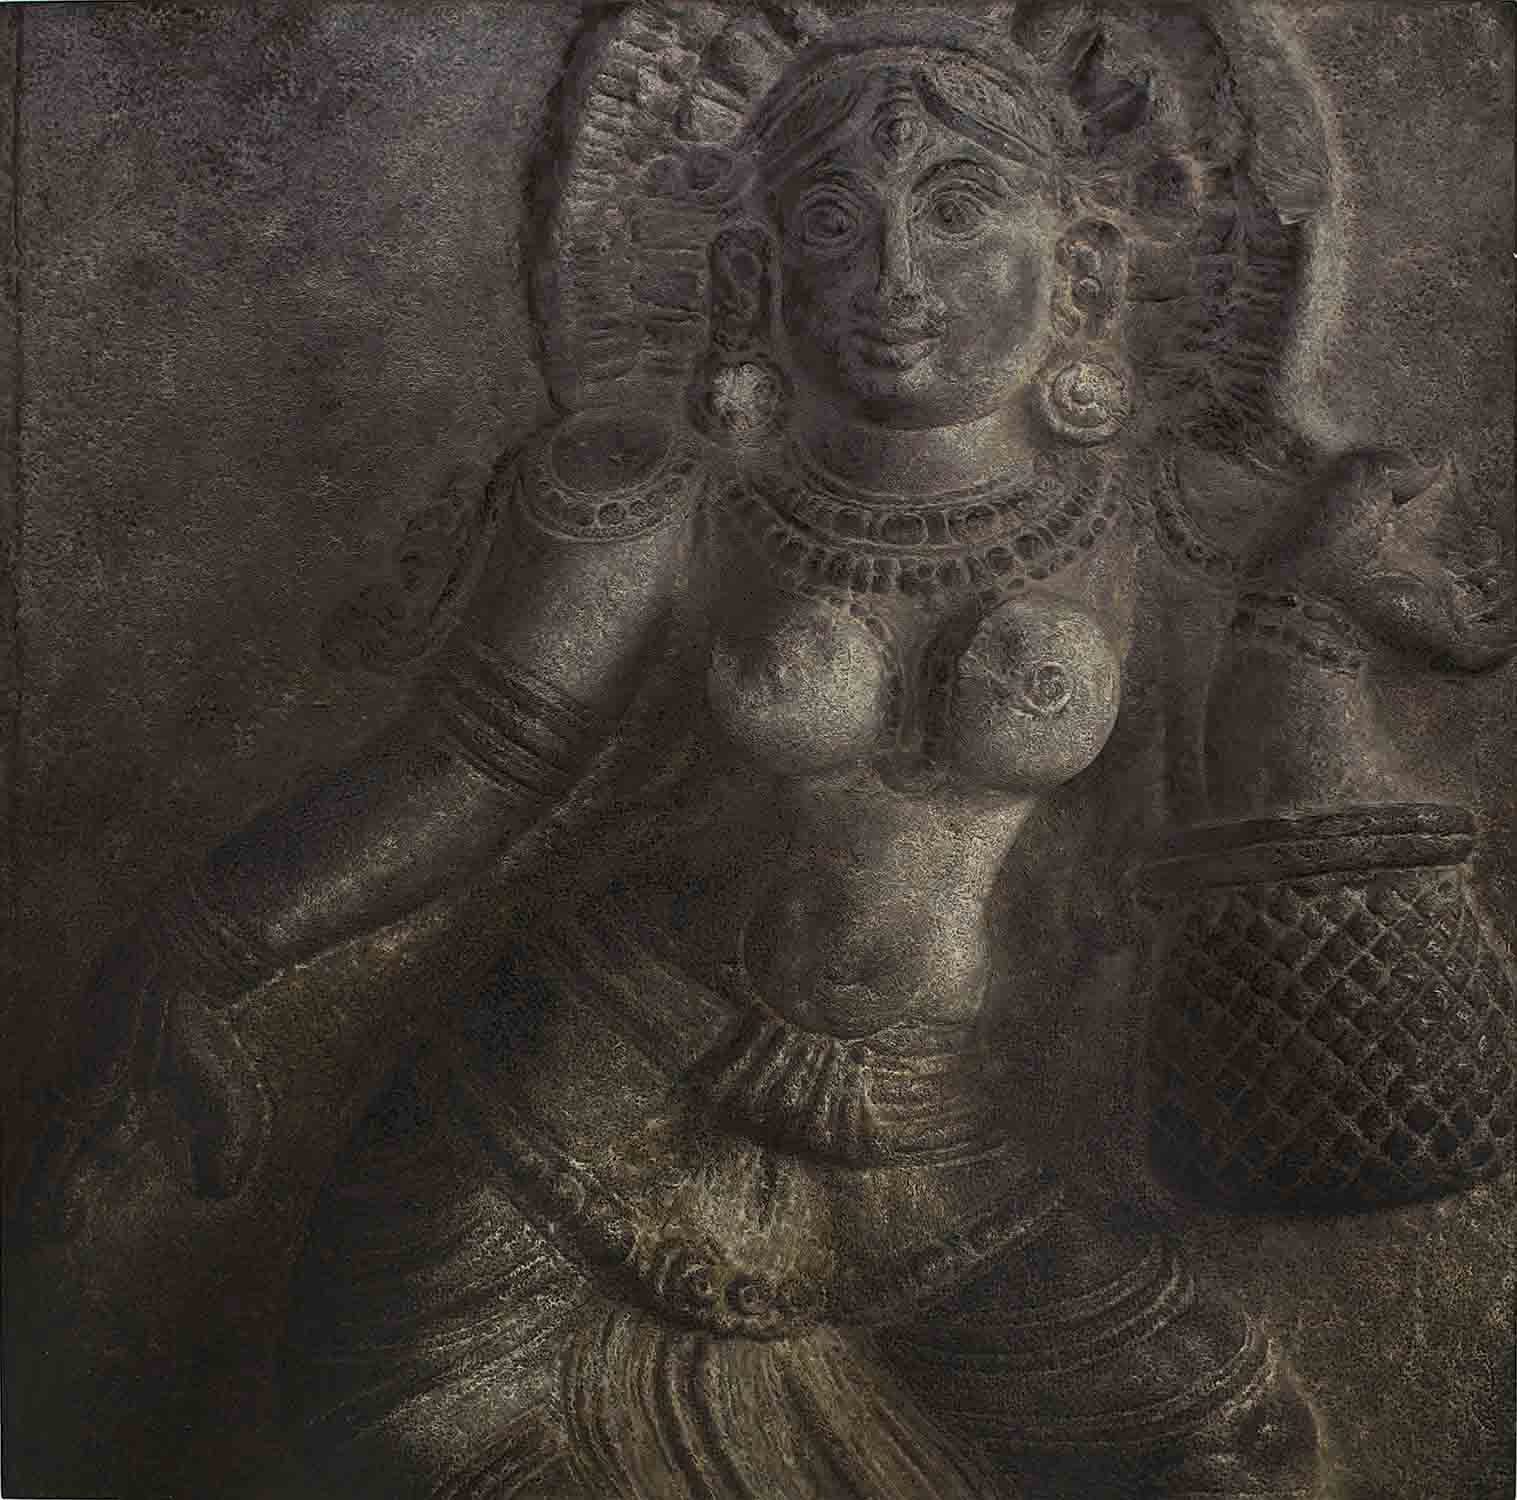 Temple Series III|B. Venkatesan- Oil on Canvas, 2017, 36 x 36 inches